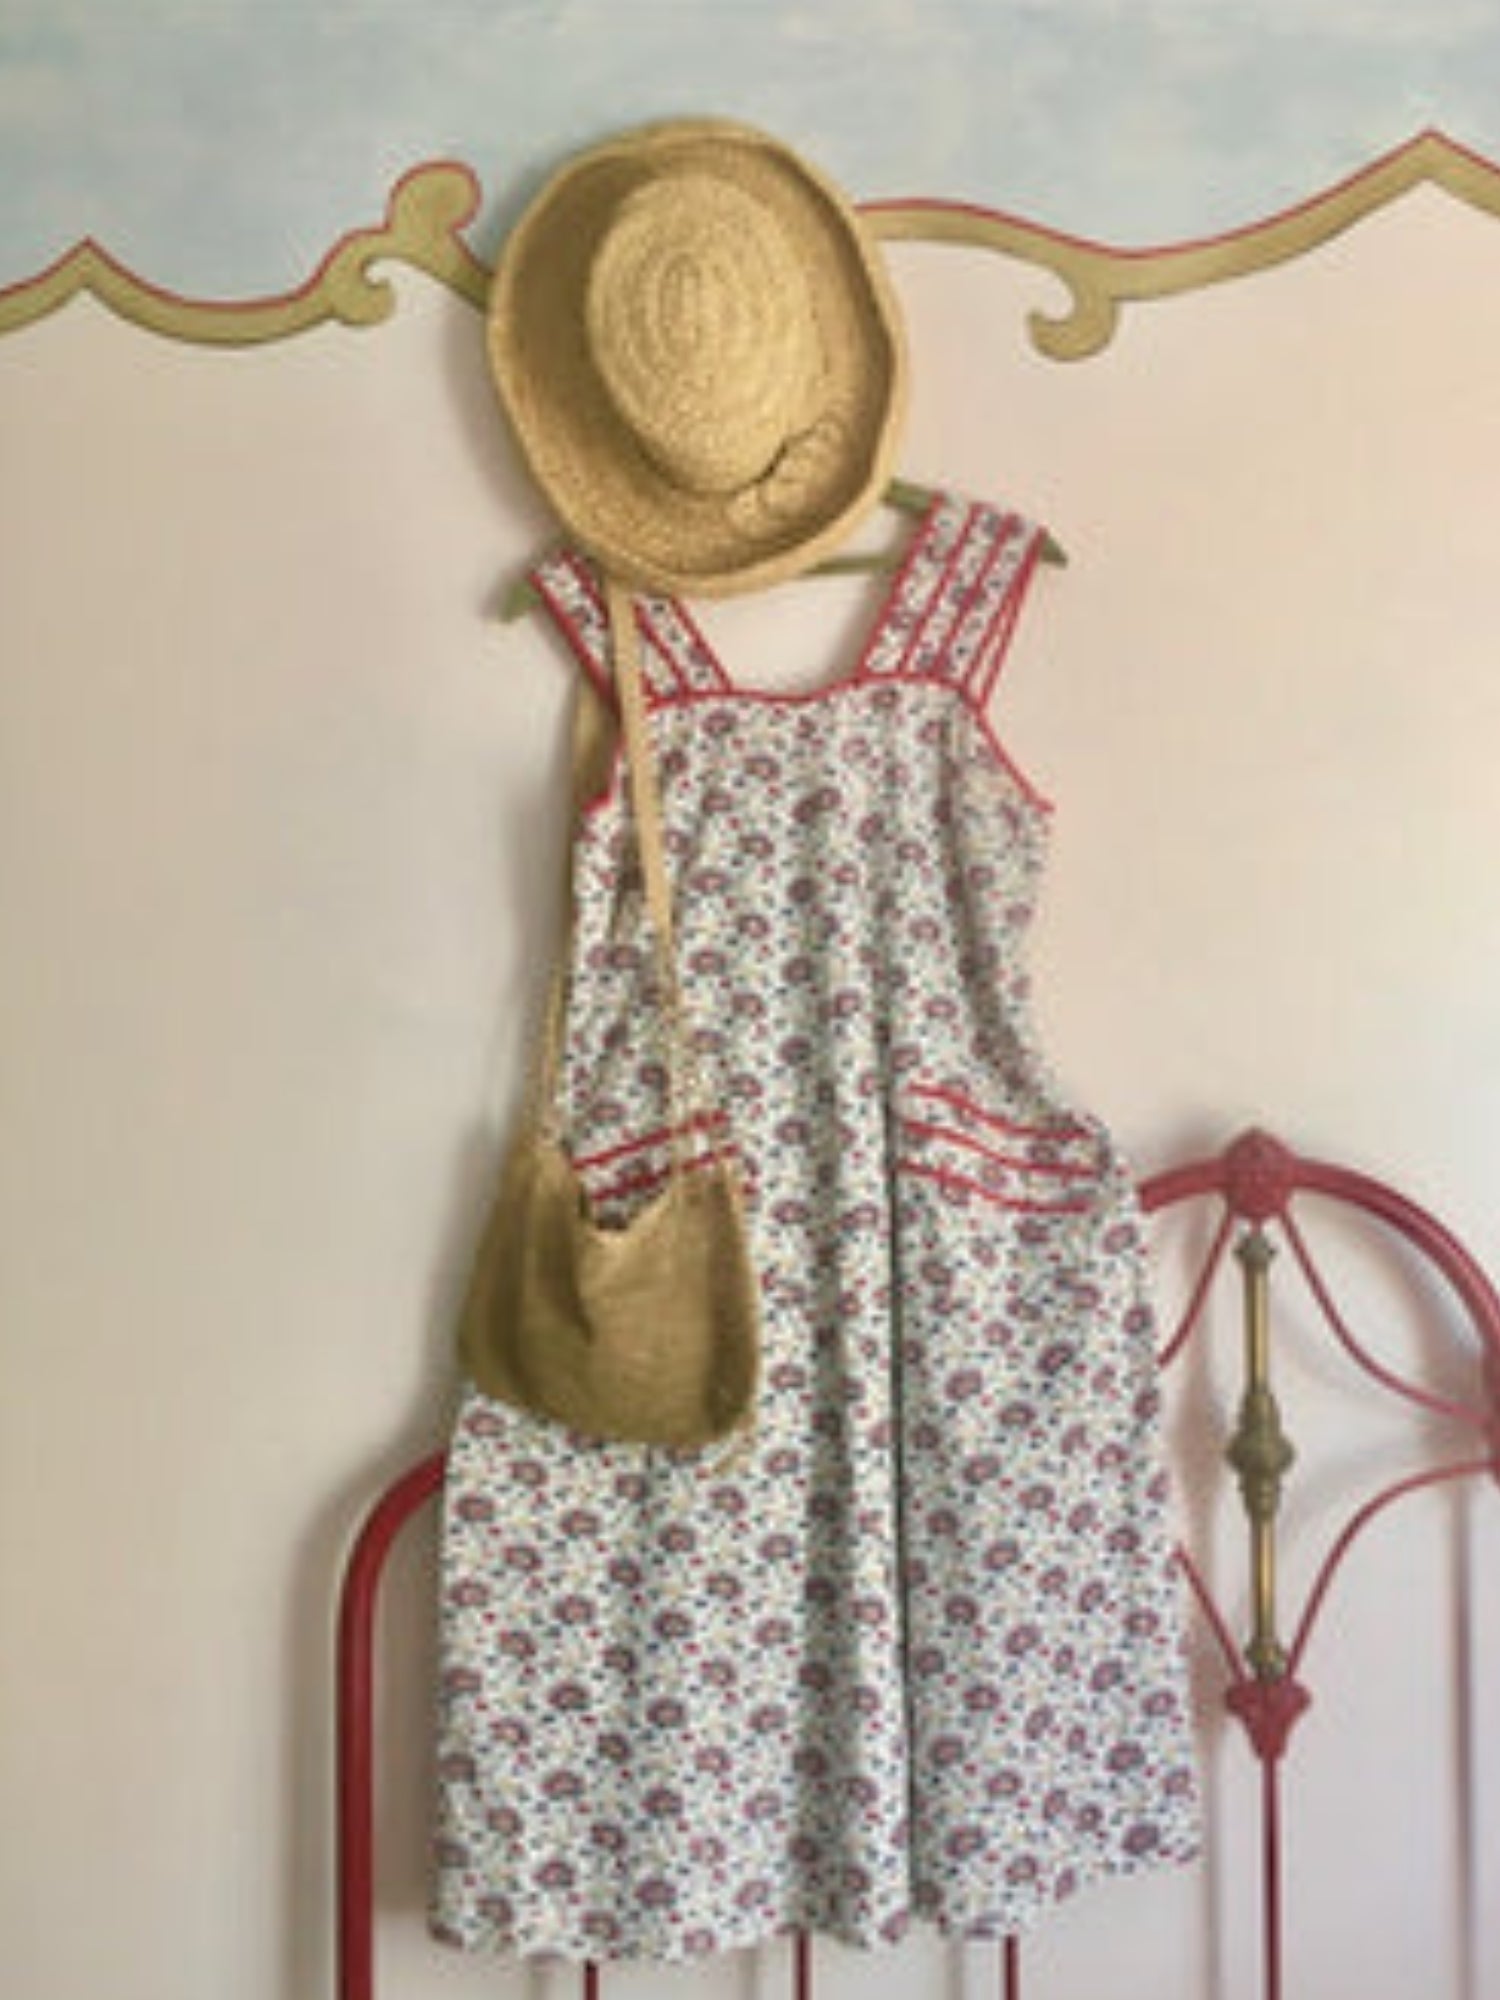 Millie's vintage house dress